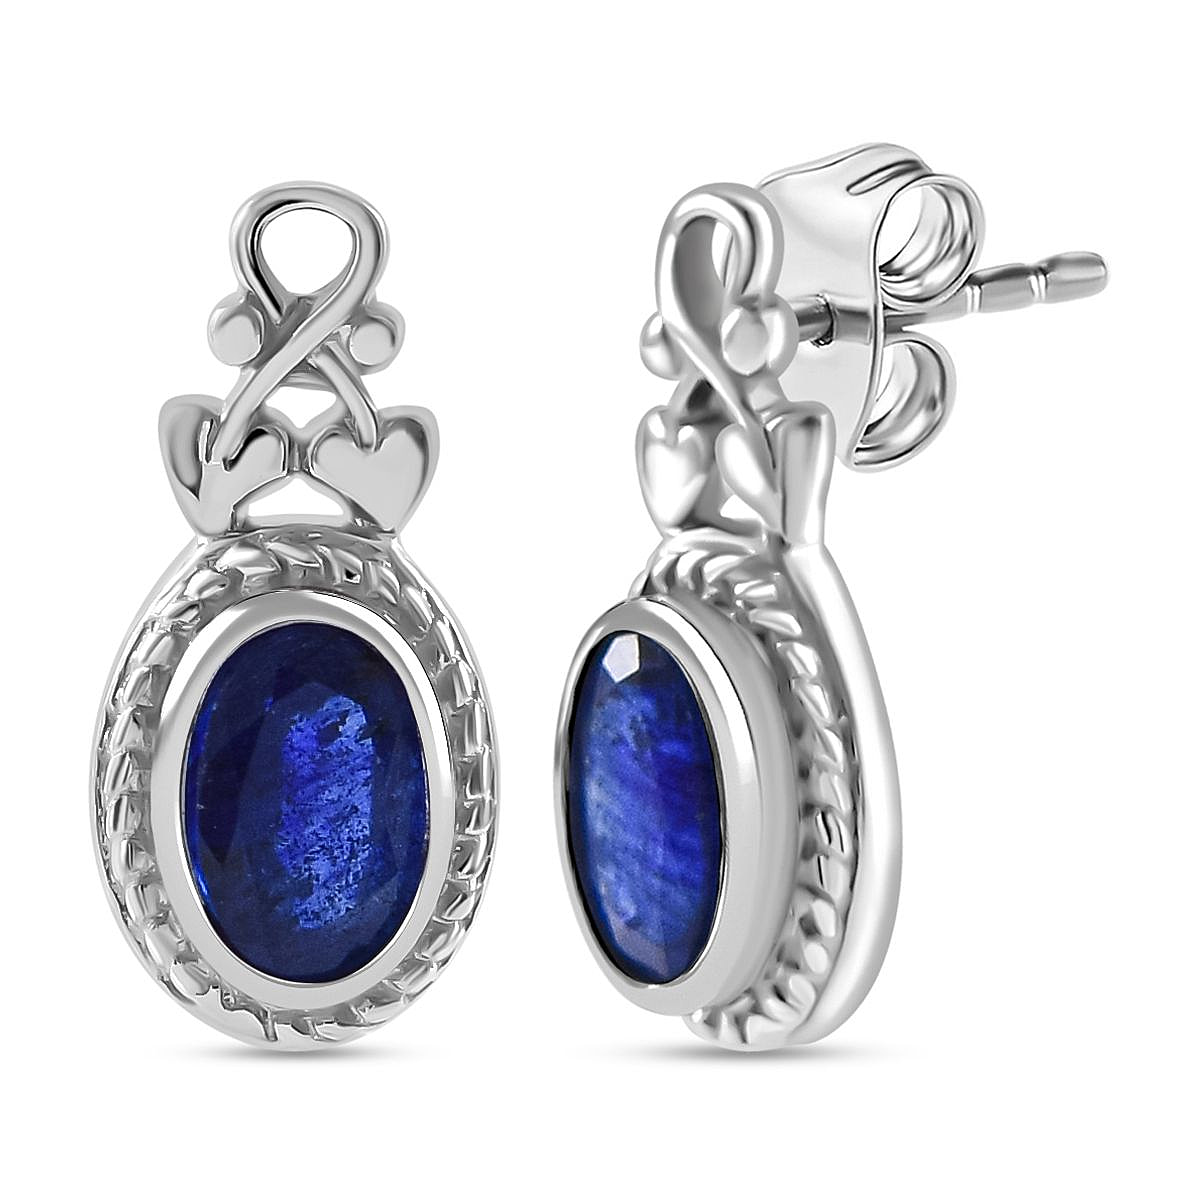 Masoala Sapphire Dangle Earrings in Rhodium Overlay Sterling Silver 1.46 Ct.